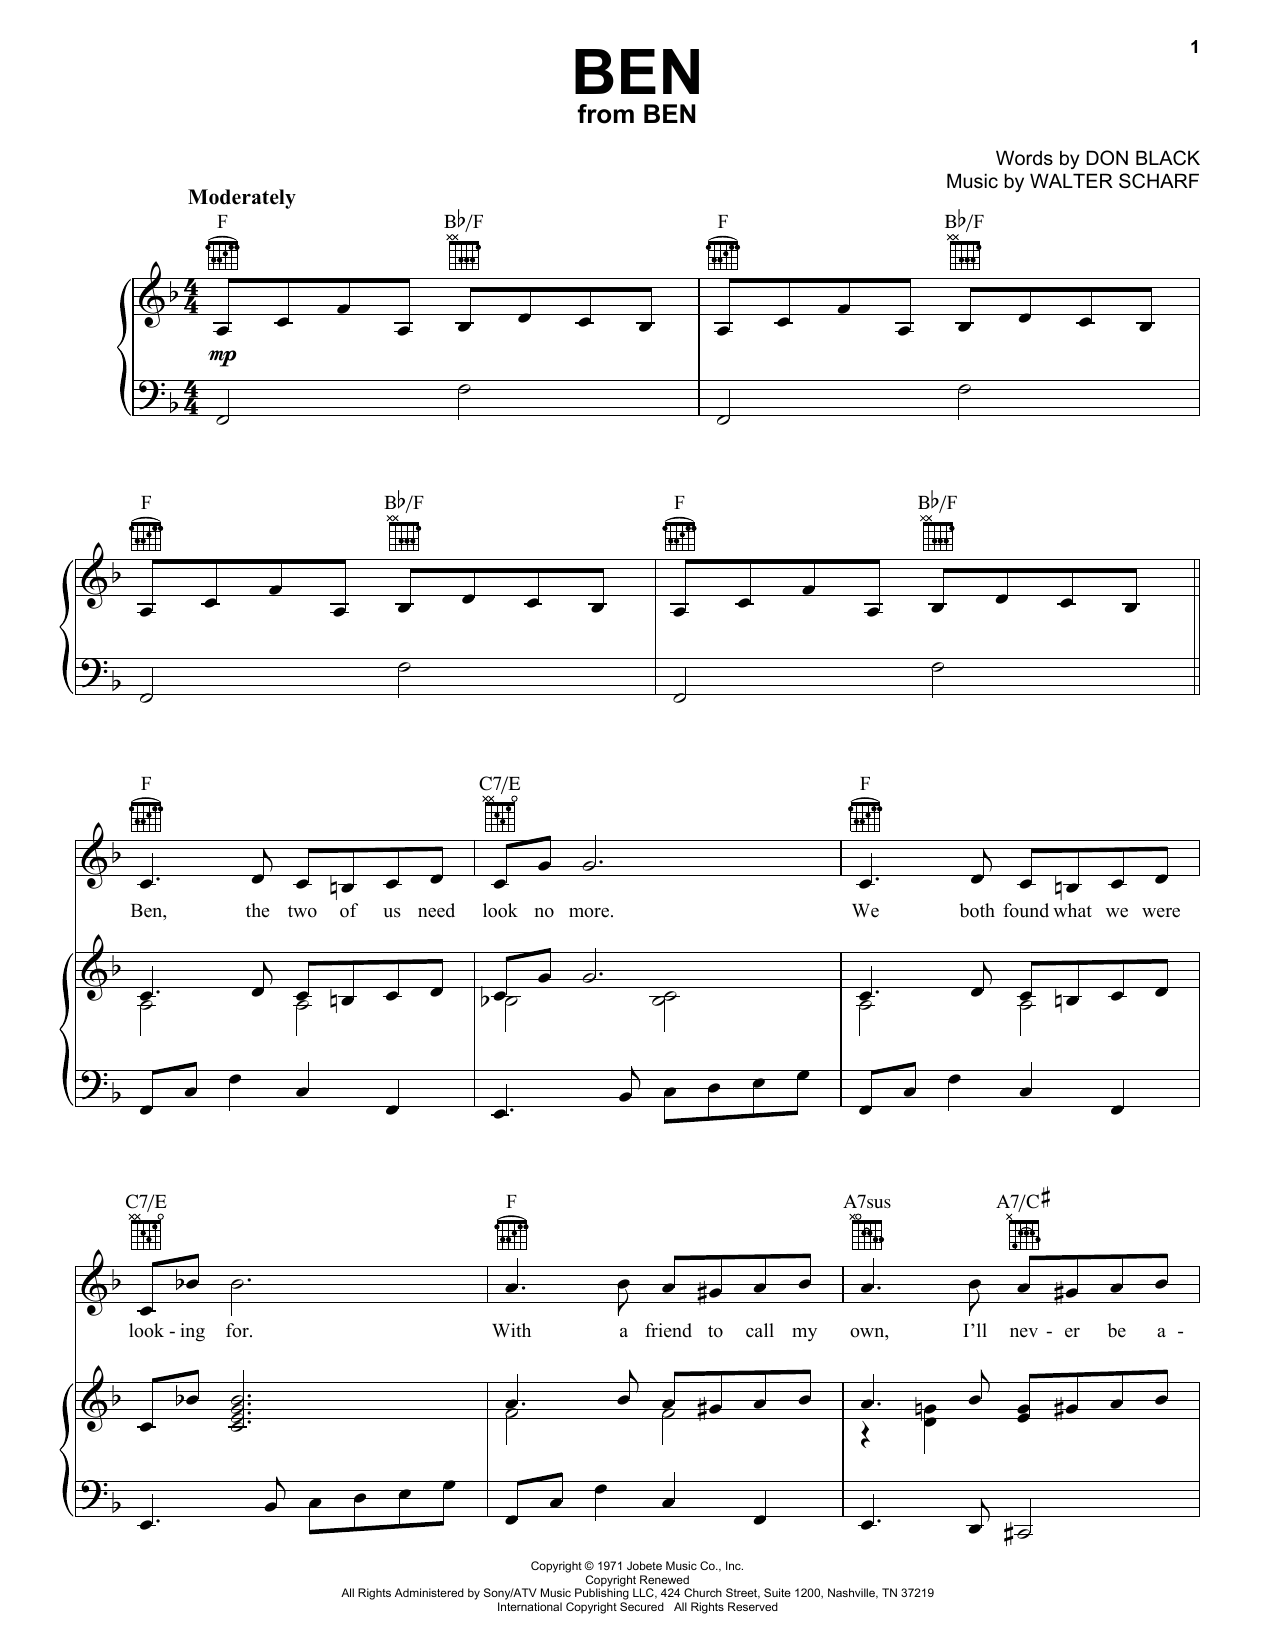 Michael Jackson Ben Sheet Music Notes & Chords for Guitar Tab - Download or Print PDF